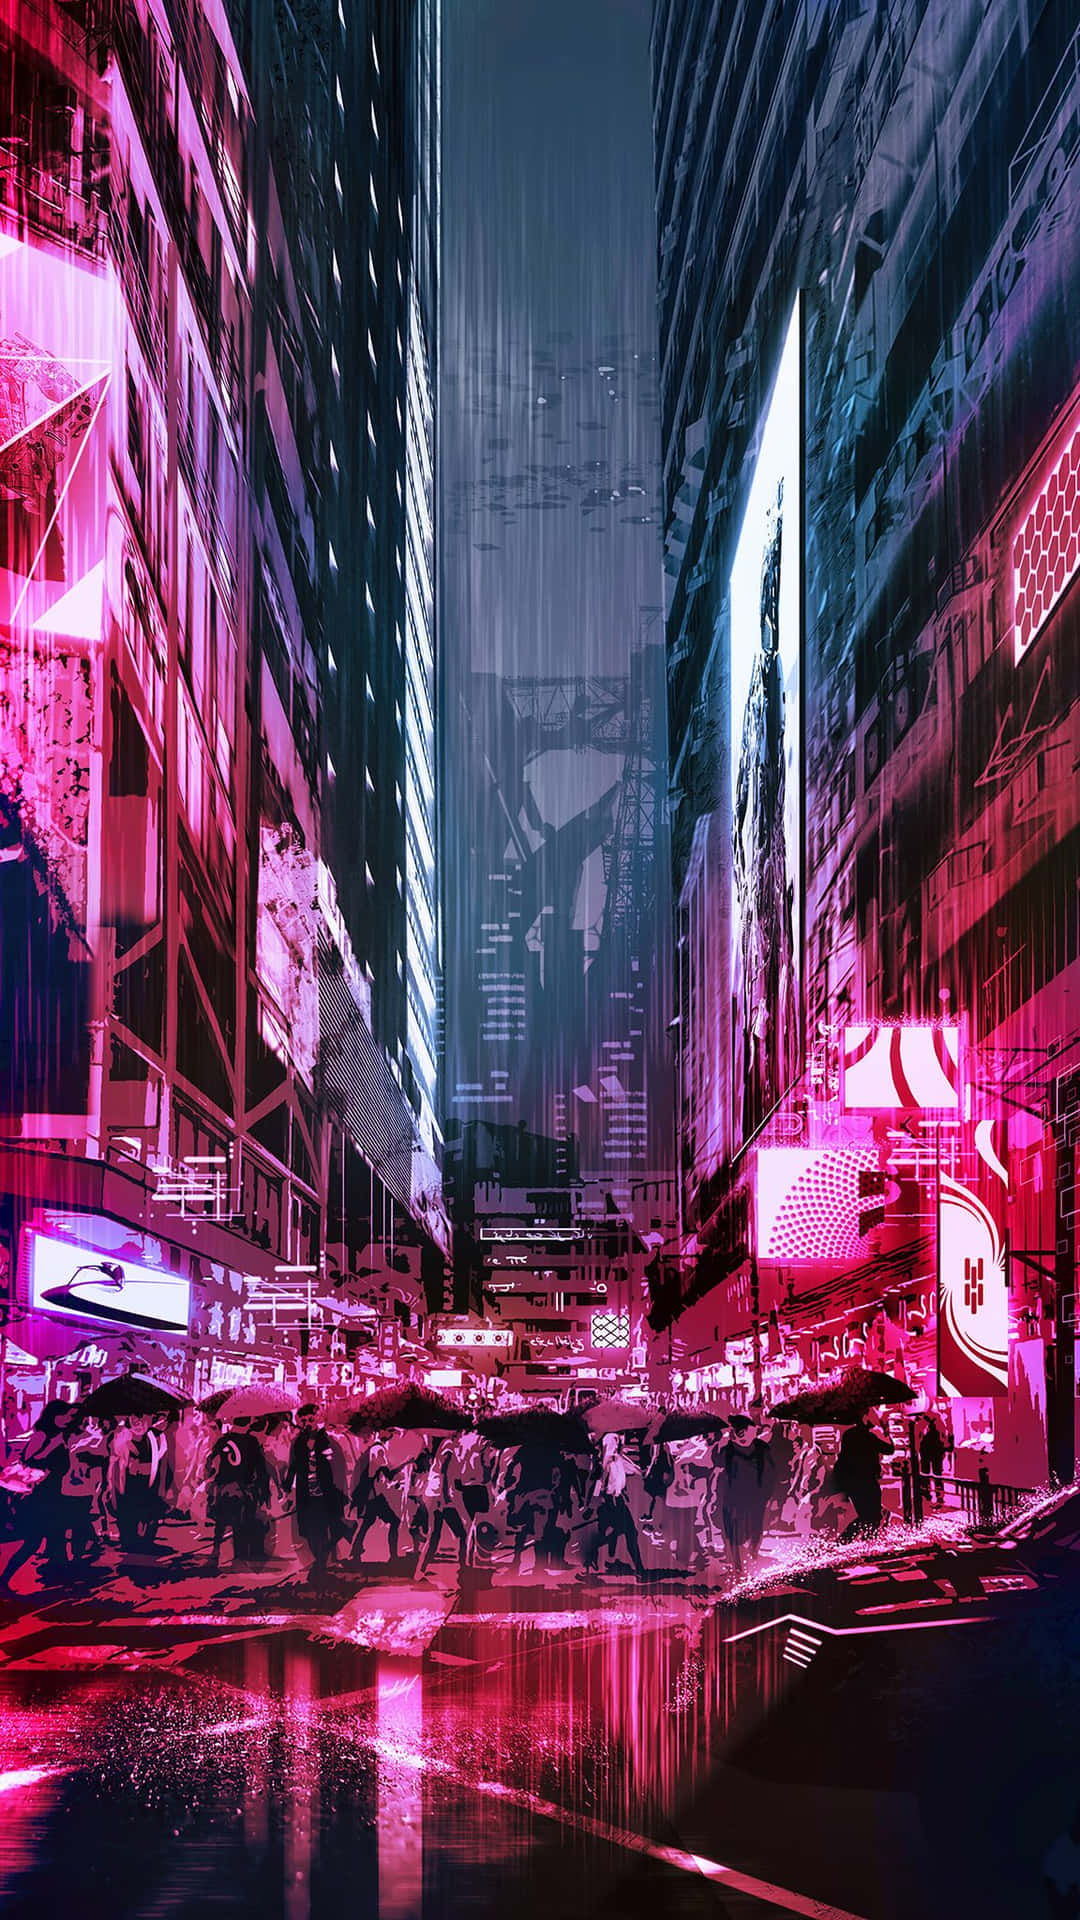 Explore the neon-lit avenues of Cyberpunk City